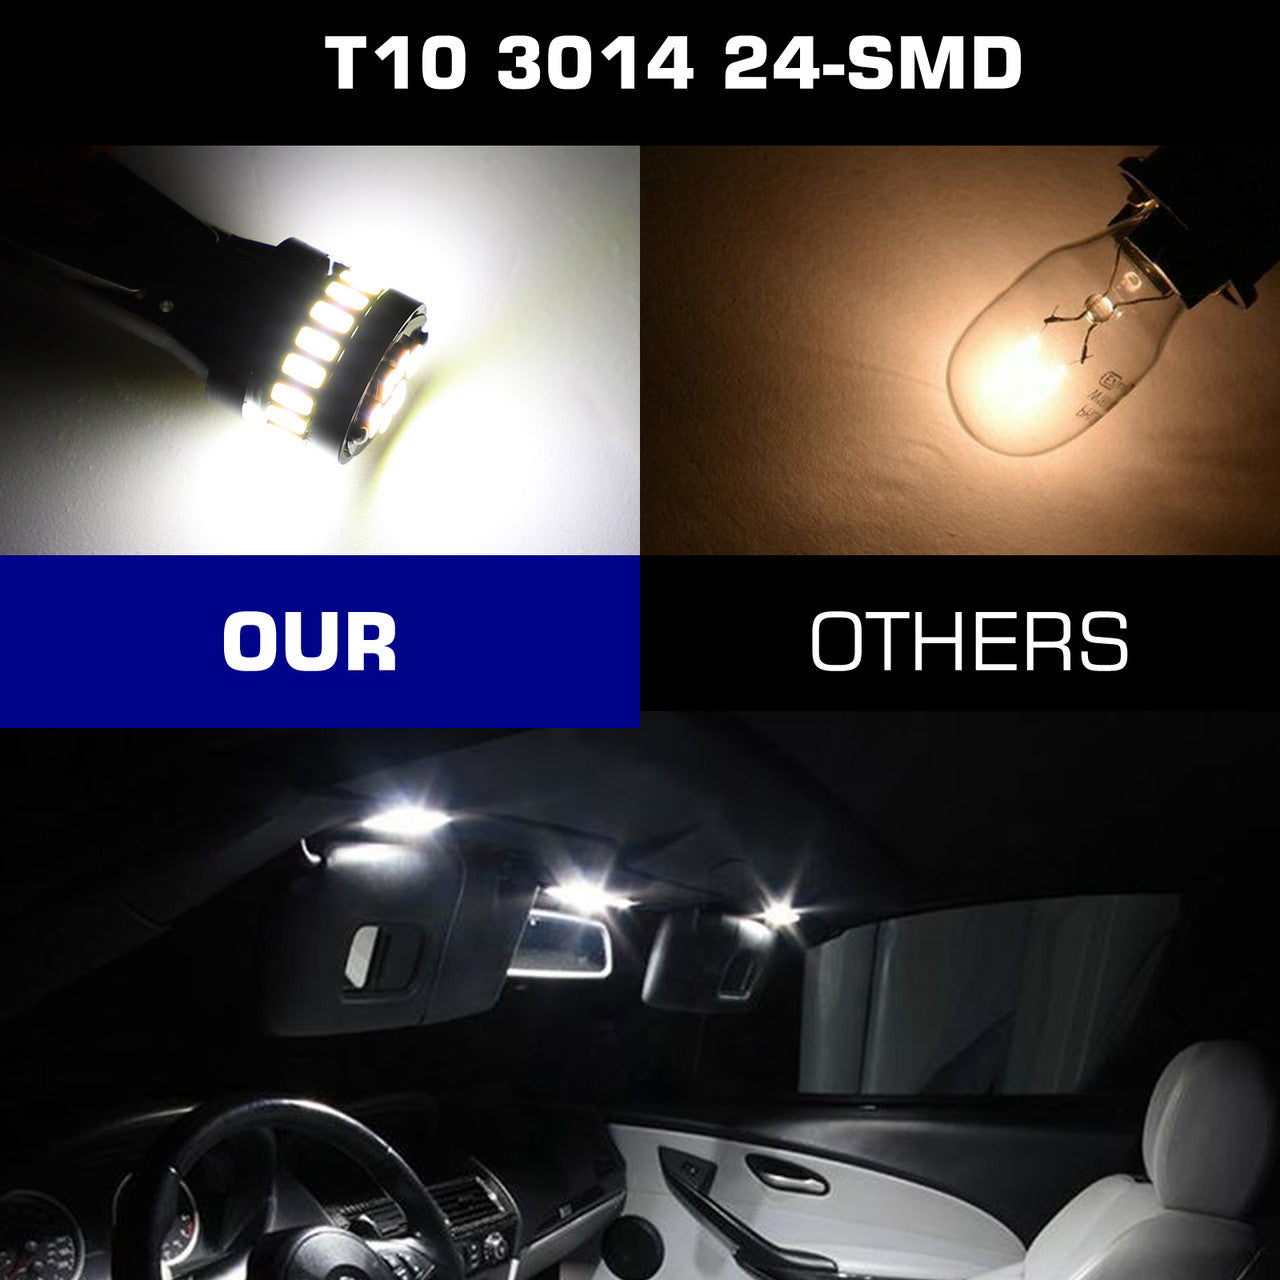 T10 Interior License Plate Light for Car Truck Van, 3014 24-SMD High Brightness T10 W5W 2825194 168 158 LED Side Indicator License Plate Compartment Door Interior Lights, 10 PCS